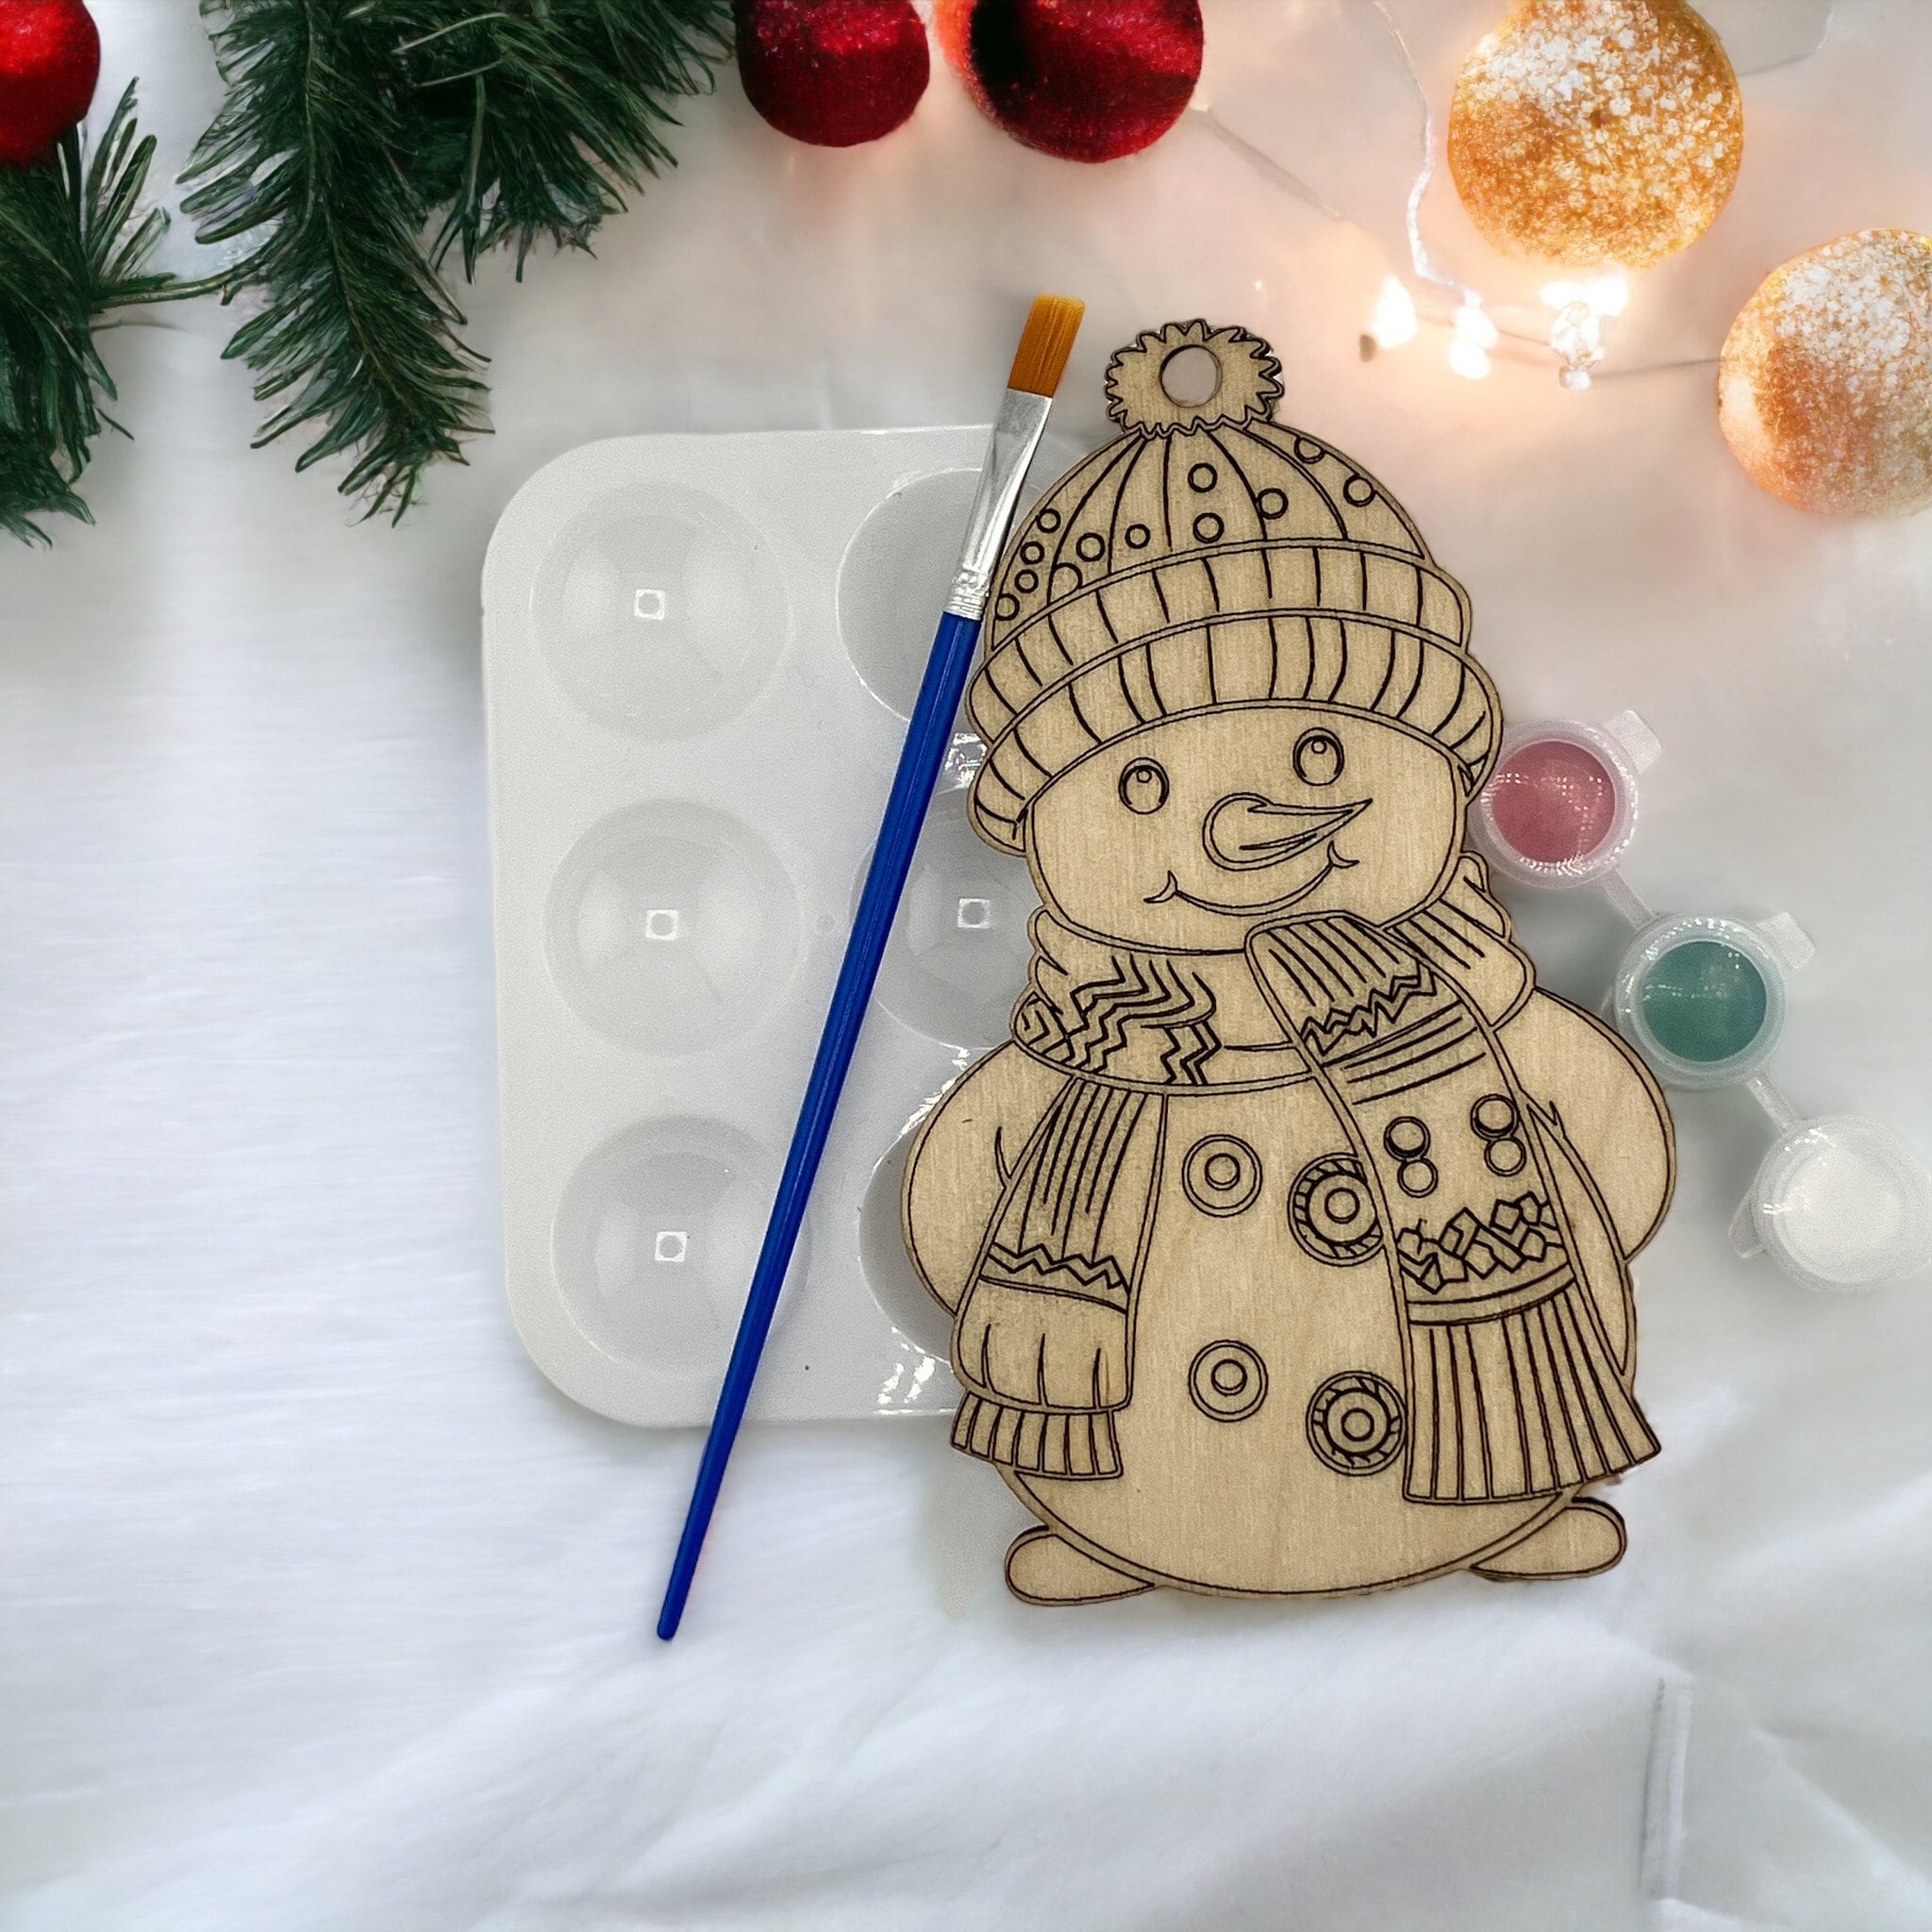 DIY Wooden Christmas Ornament Paint Kit